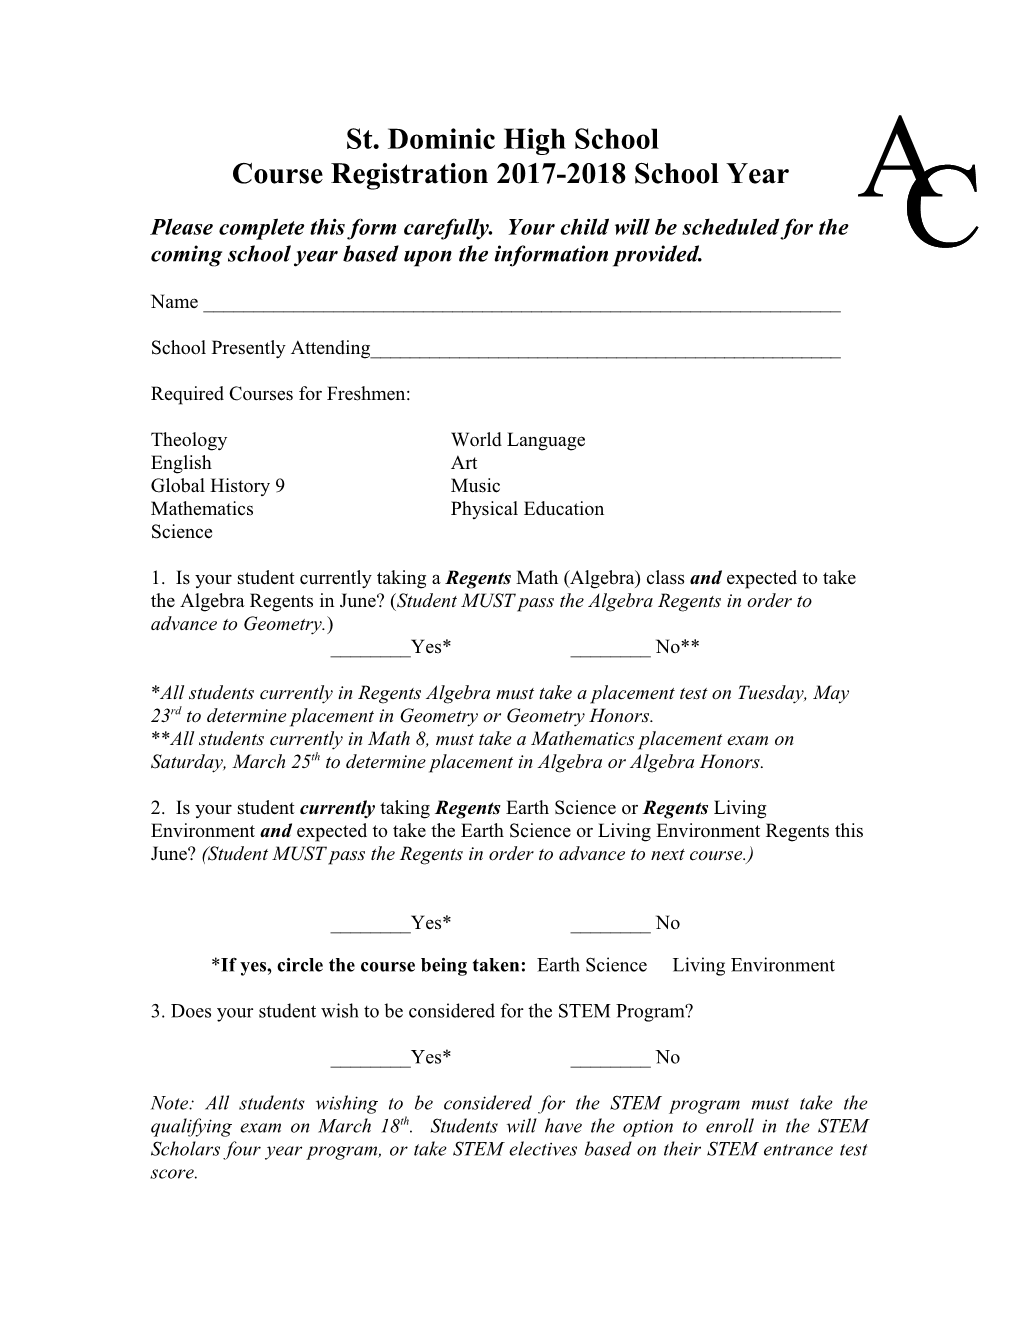 Course Registration 2017-2018 School Year